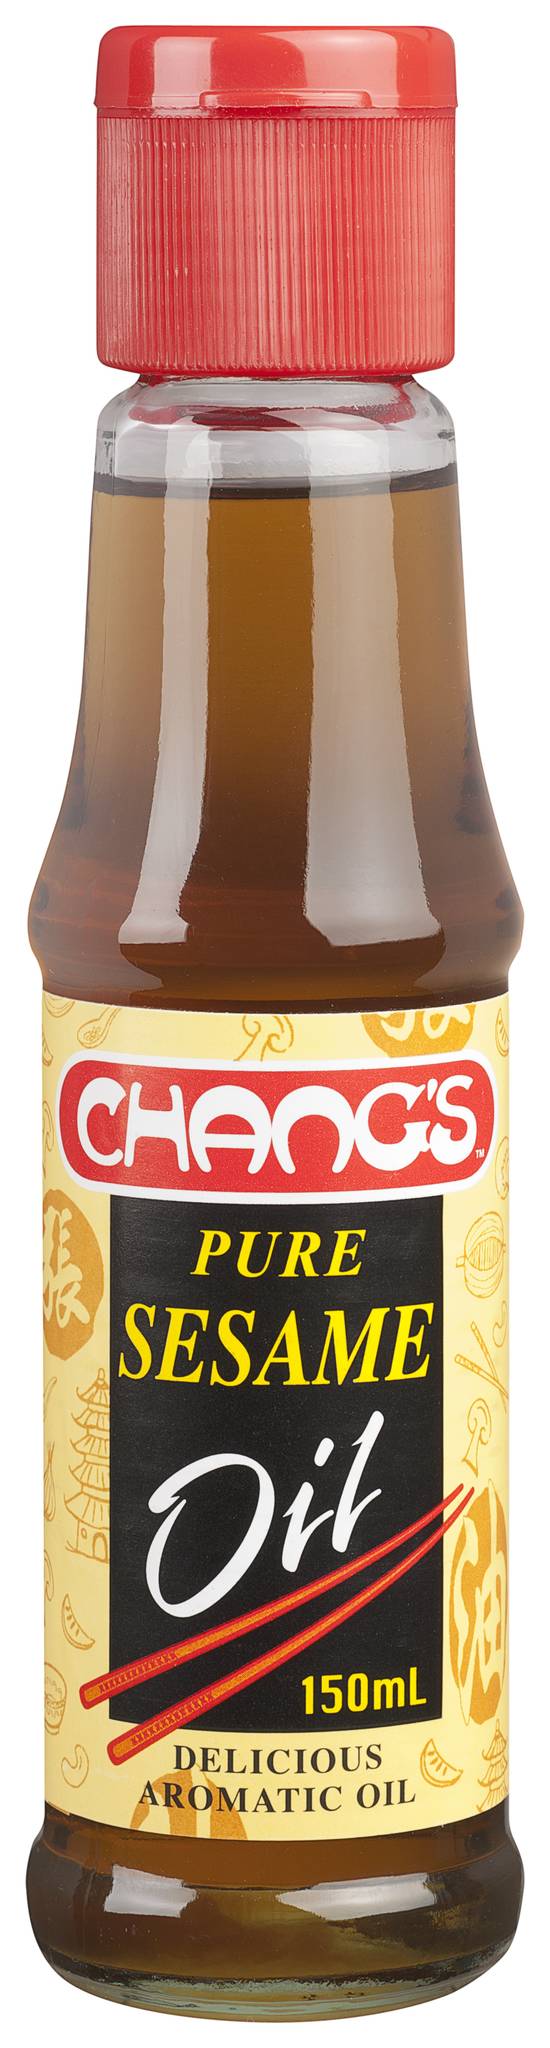 Changs Pure Sesame Oil 150ml